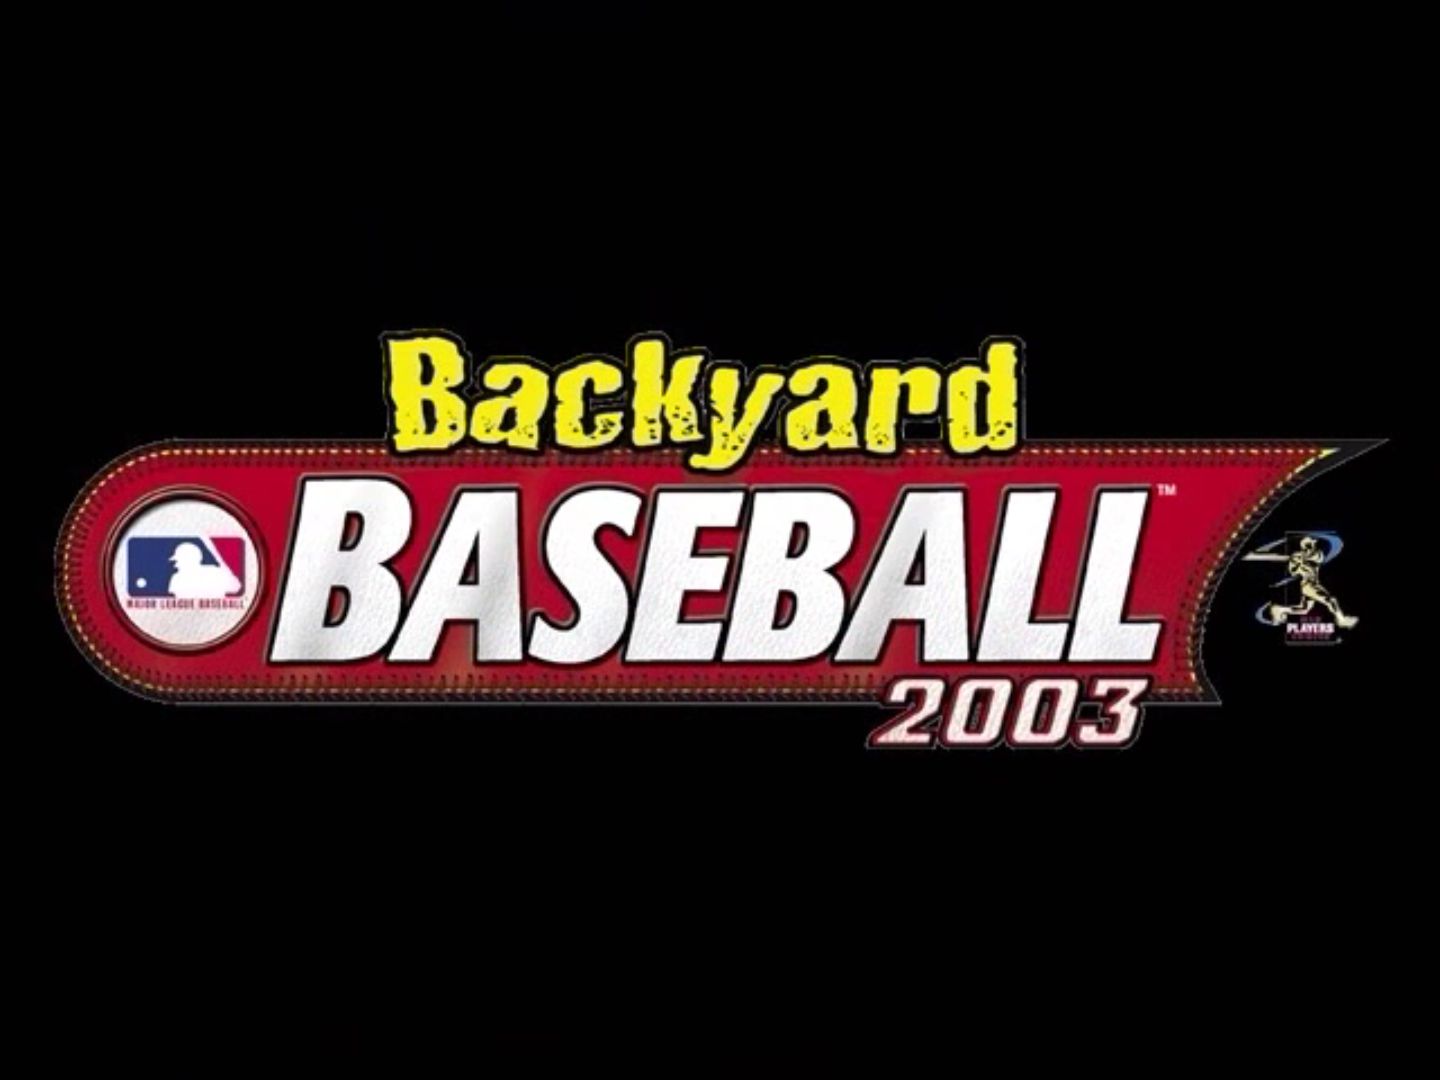 backyard baseball 2003 download backyard baseball 2005 download